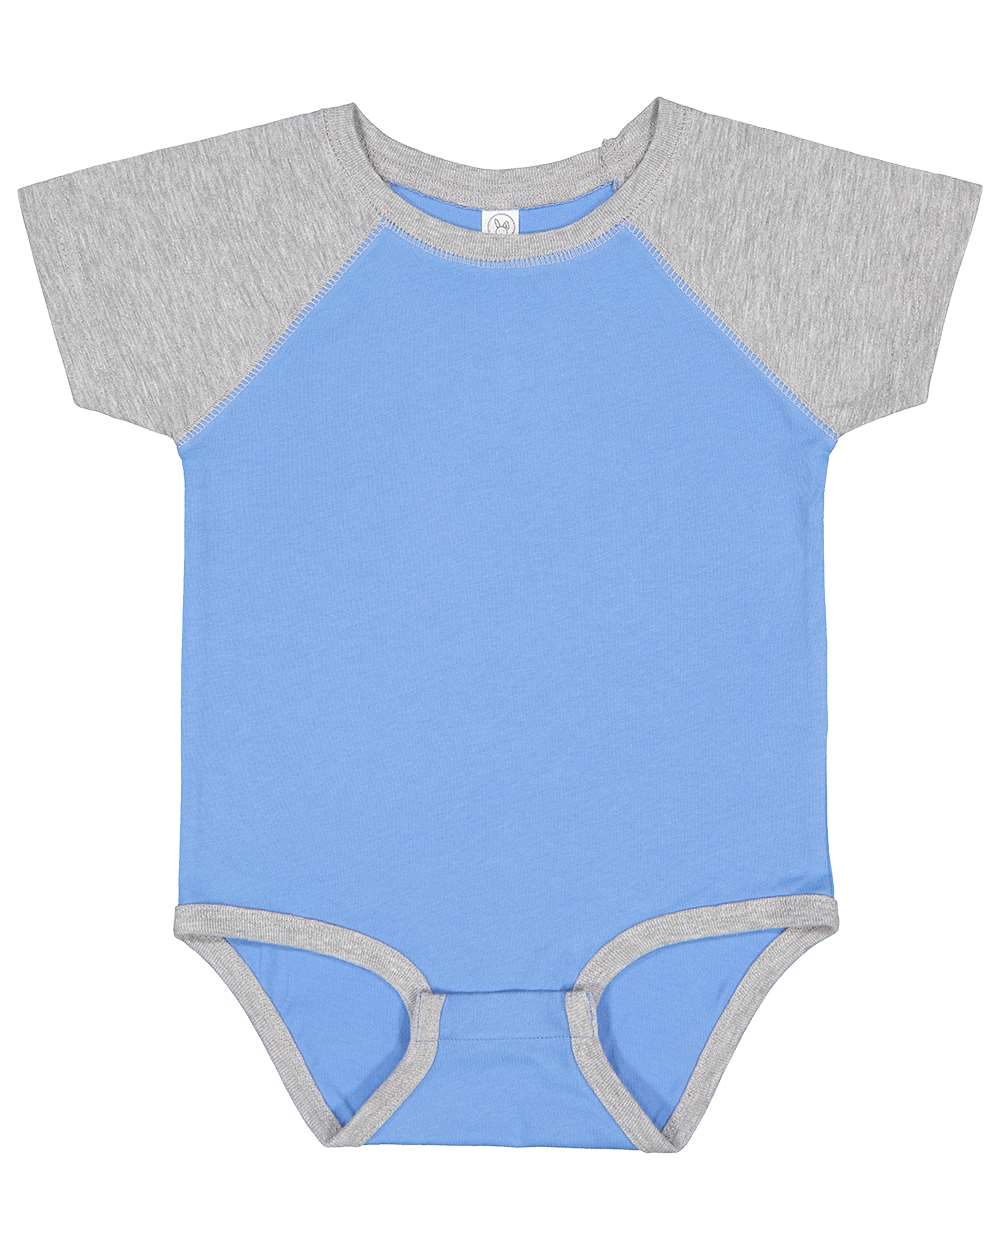 rabbit skins infant baseball jersey bodysuit onesie carolina blue vintage heather grey